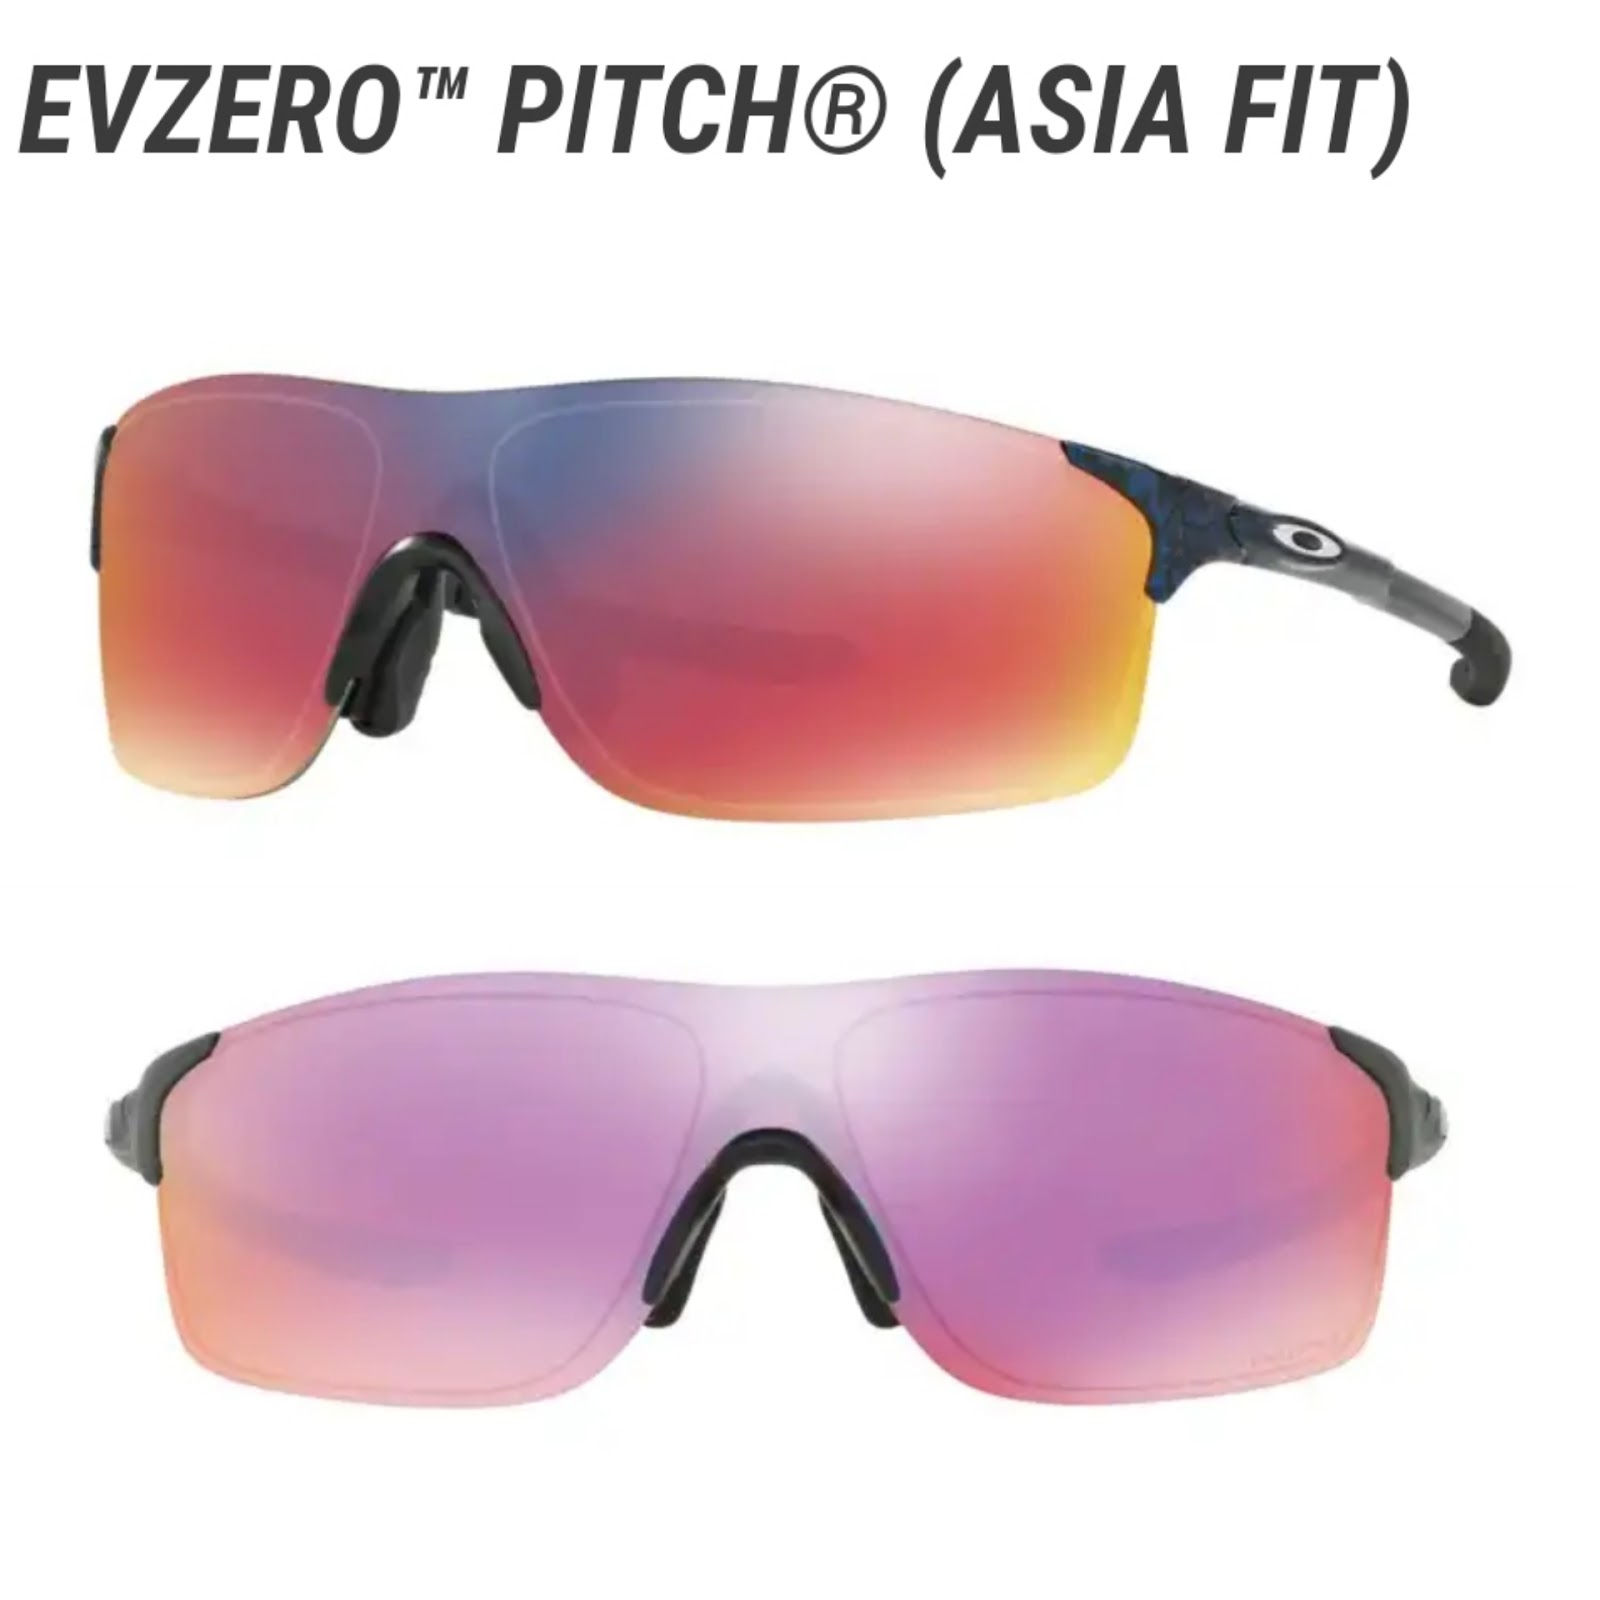 evzero pitch